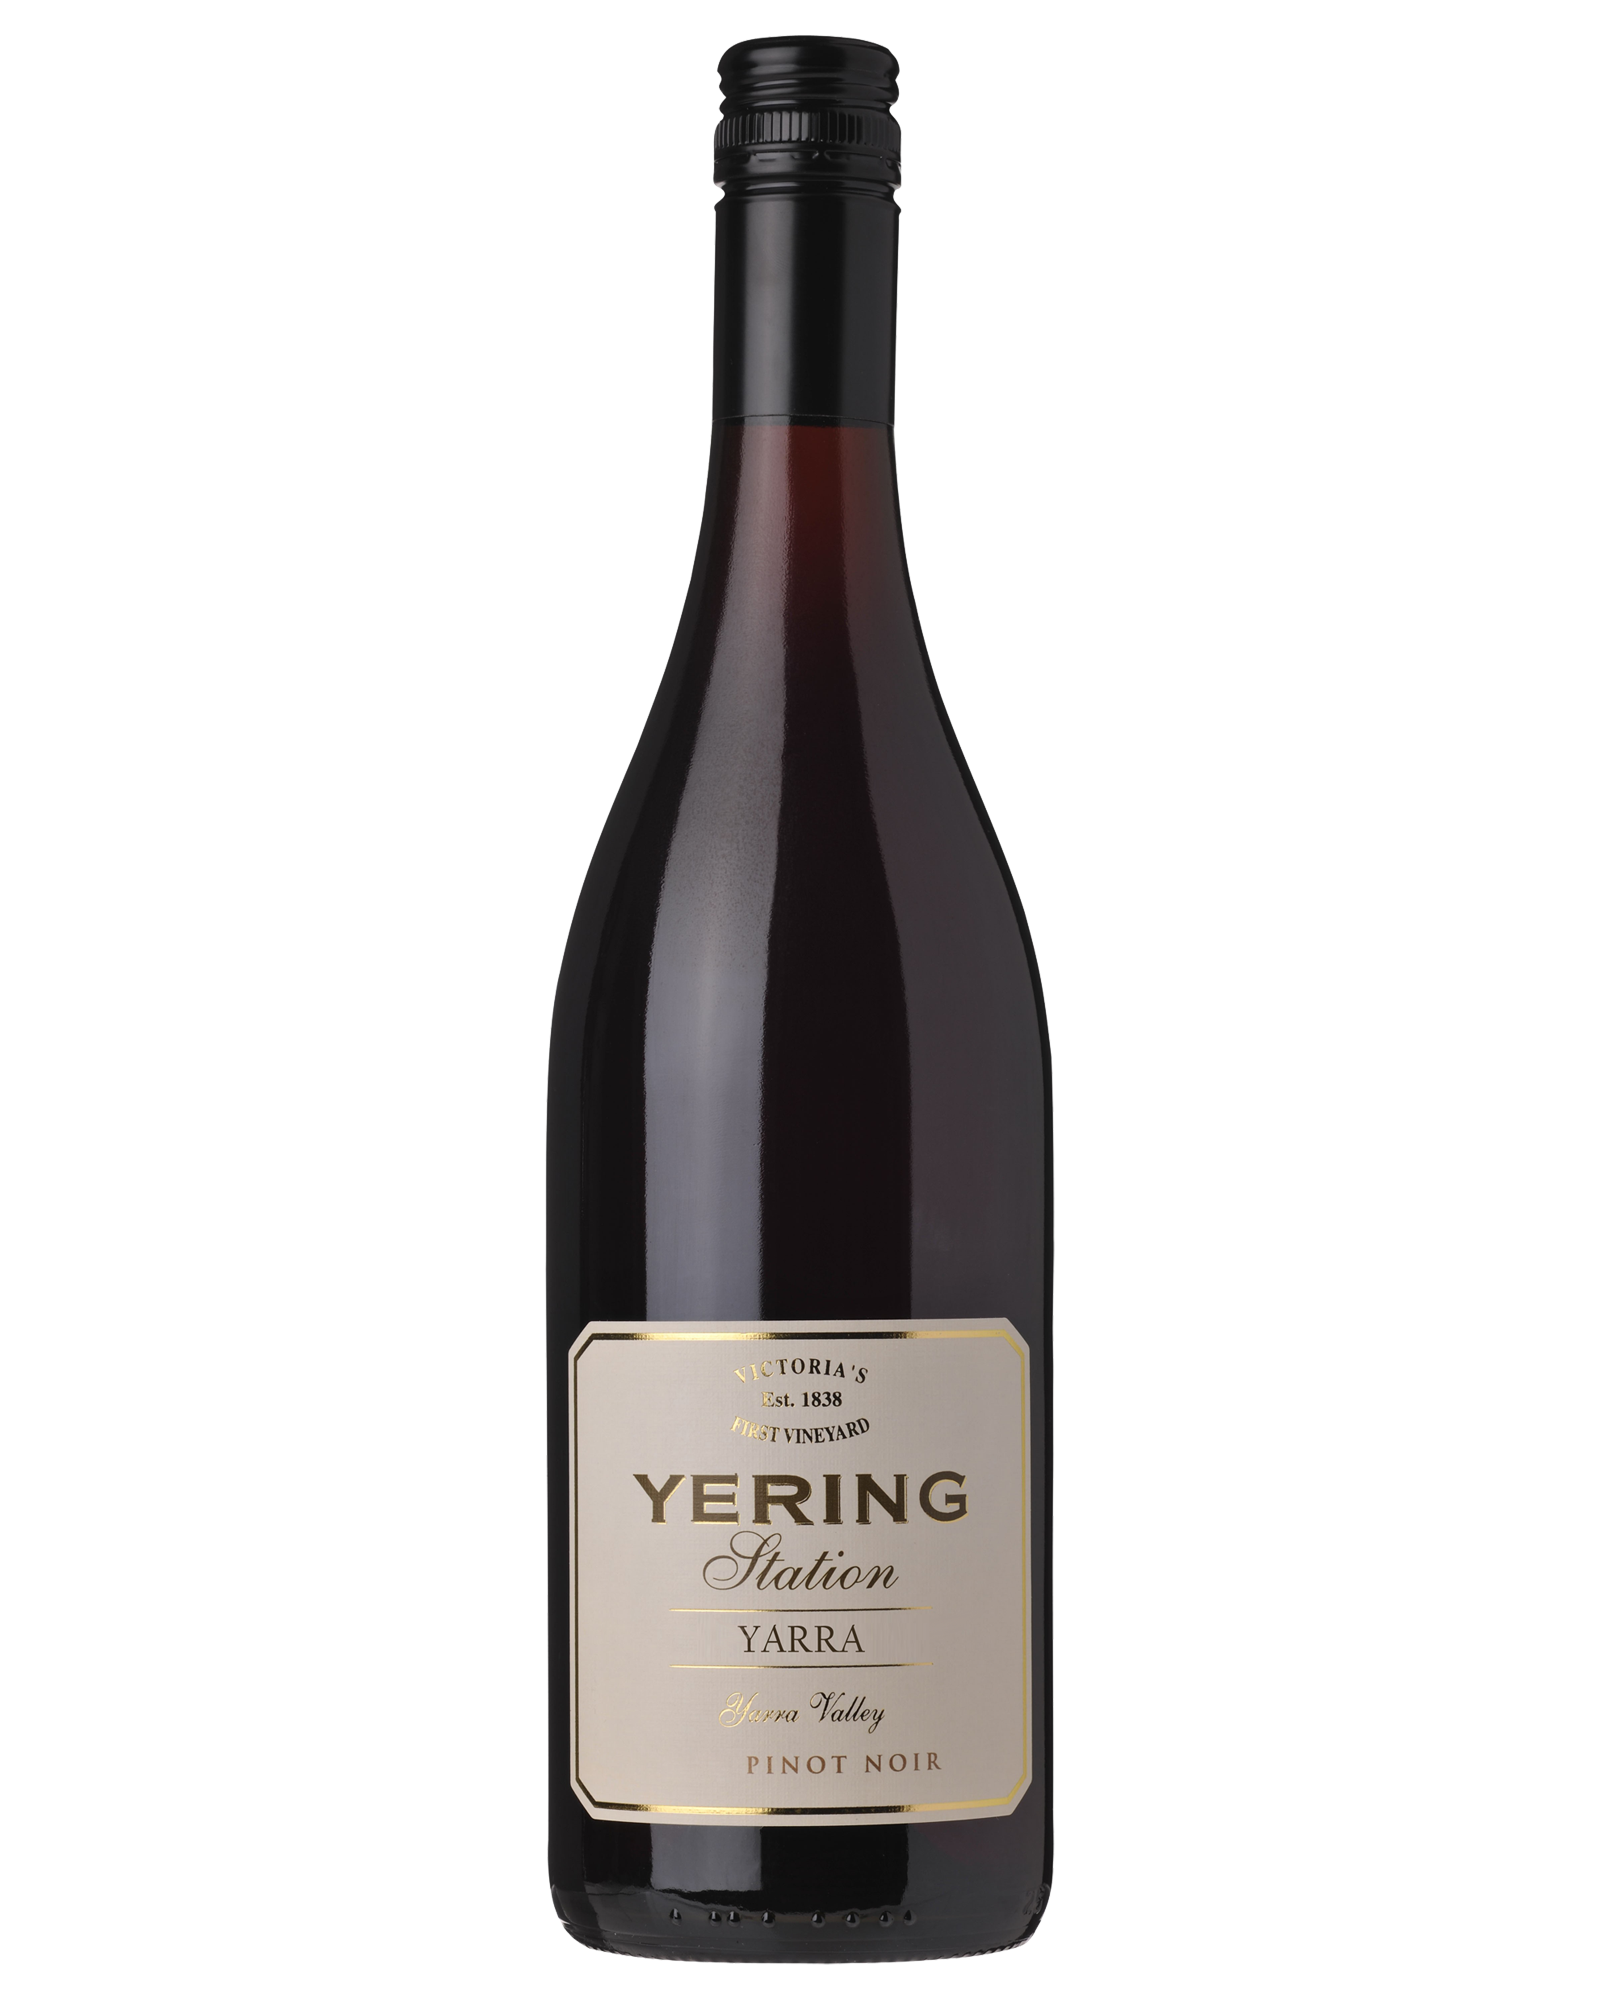 Yering Station Yarra Valley Pinot Noir